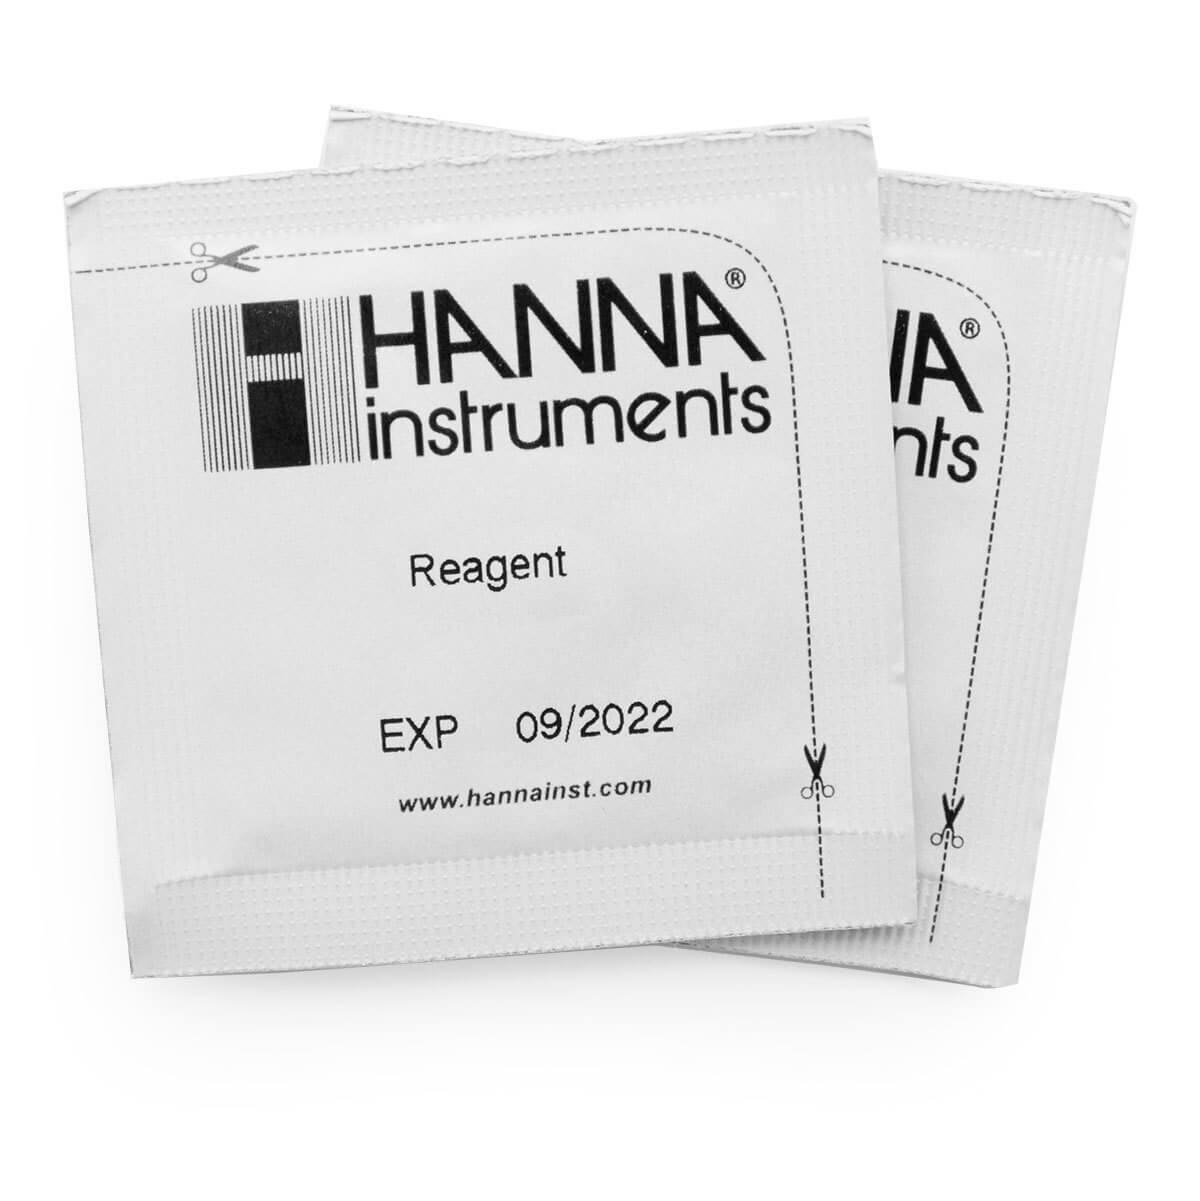 Fotómetro para dureza total (Kit completo) » HANNA® instruments Ecuador